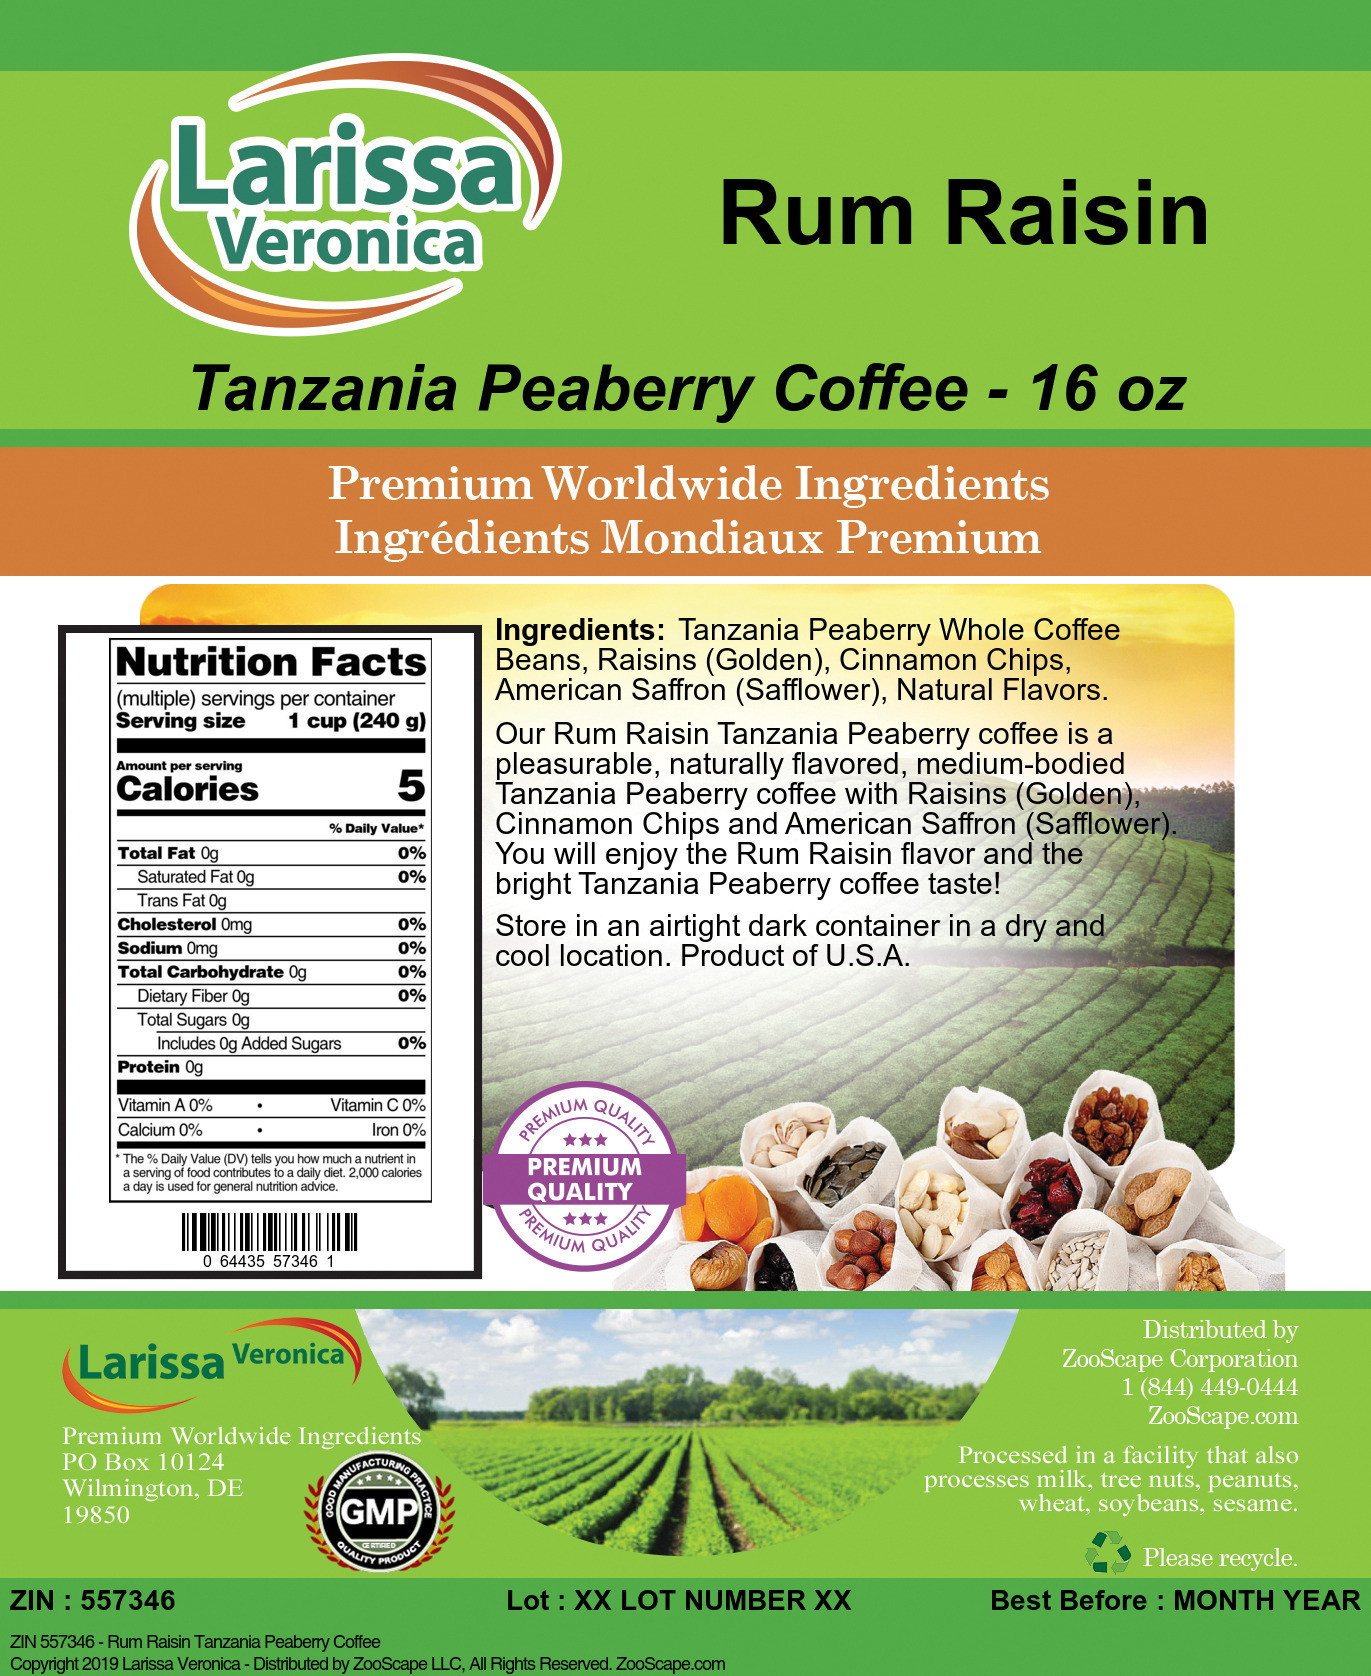 Rum Raisin Tanzania Peaberry Coffee - Label